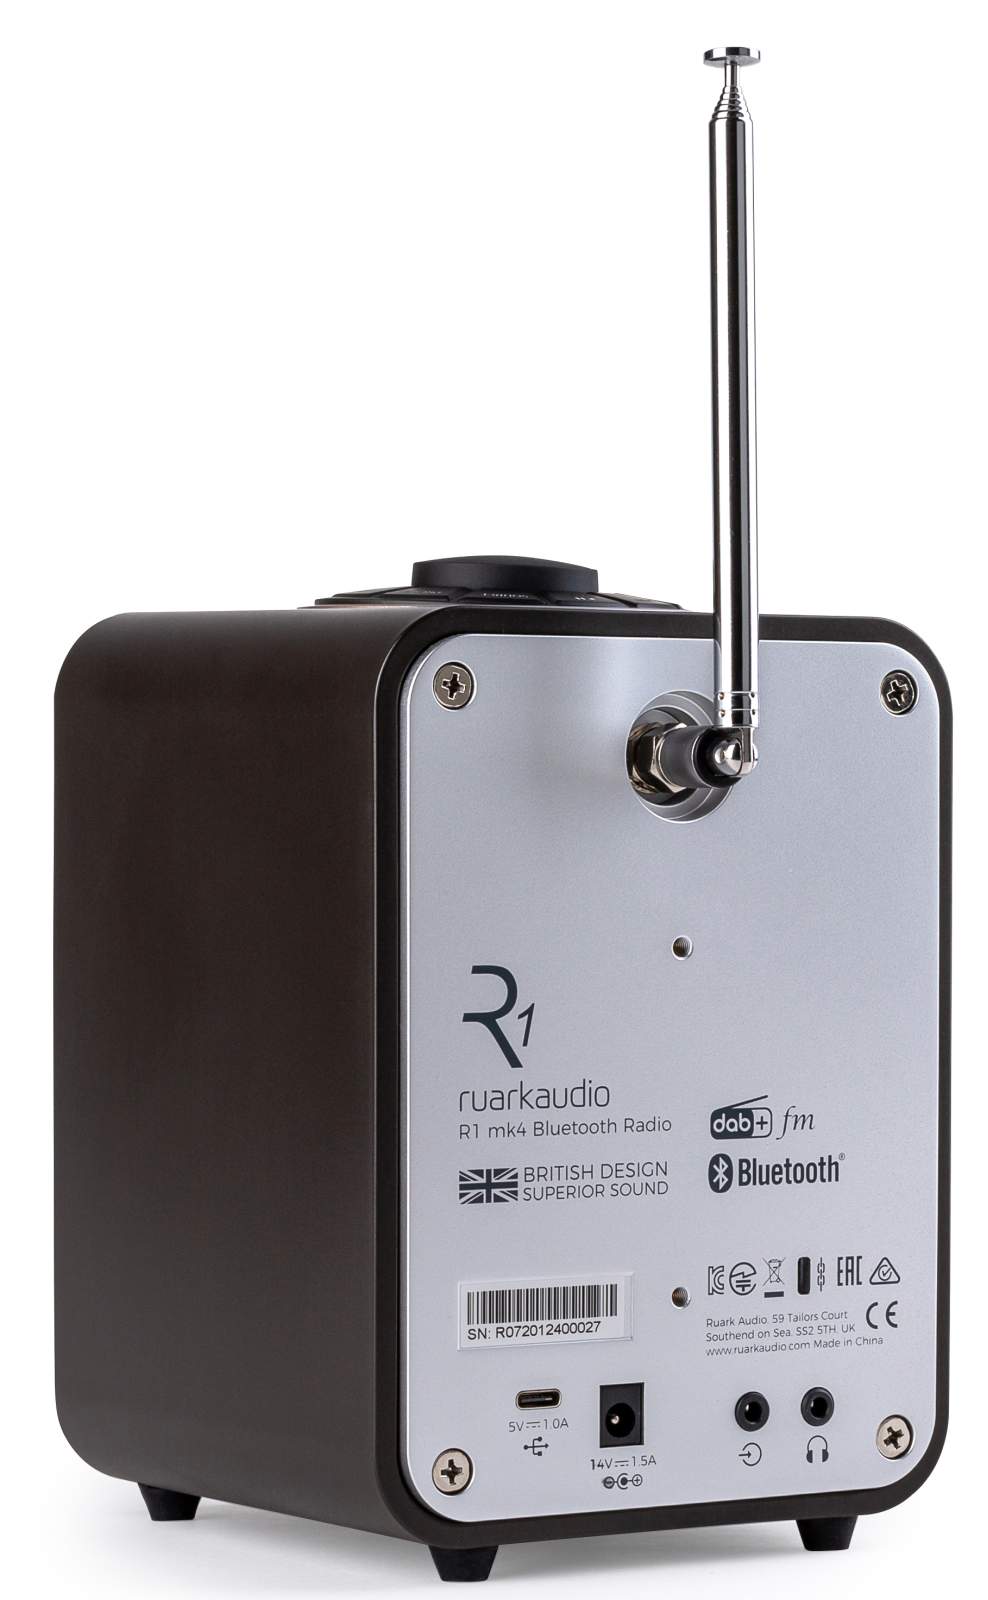 ruarkaudio R1 MK4 Digitalradio Espresso (braun)